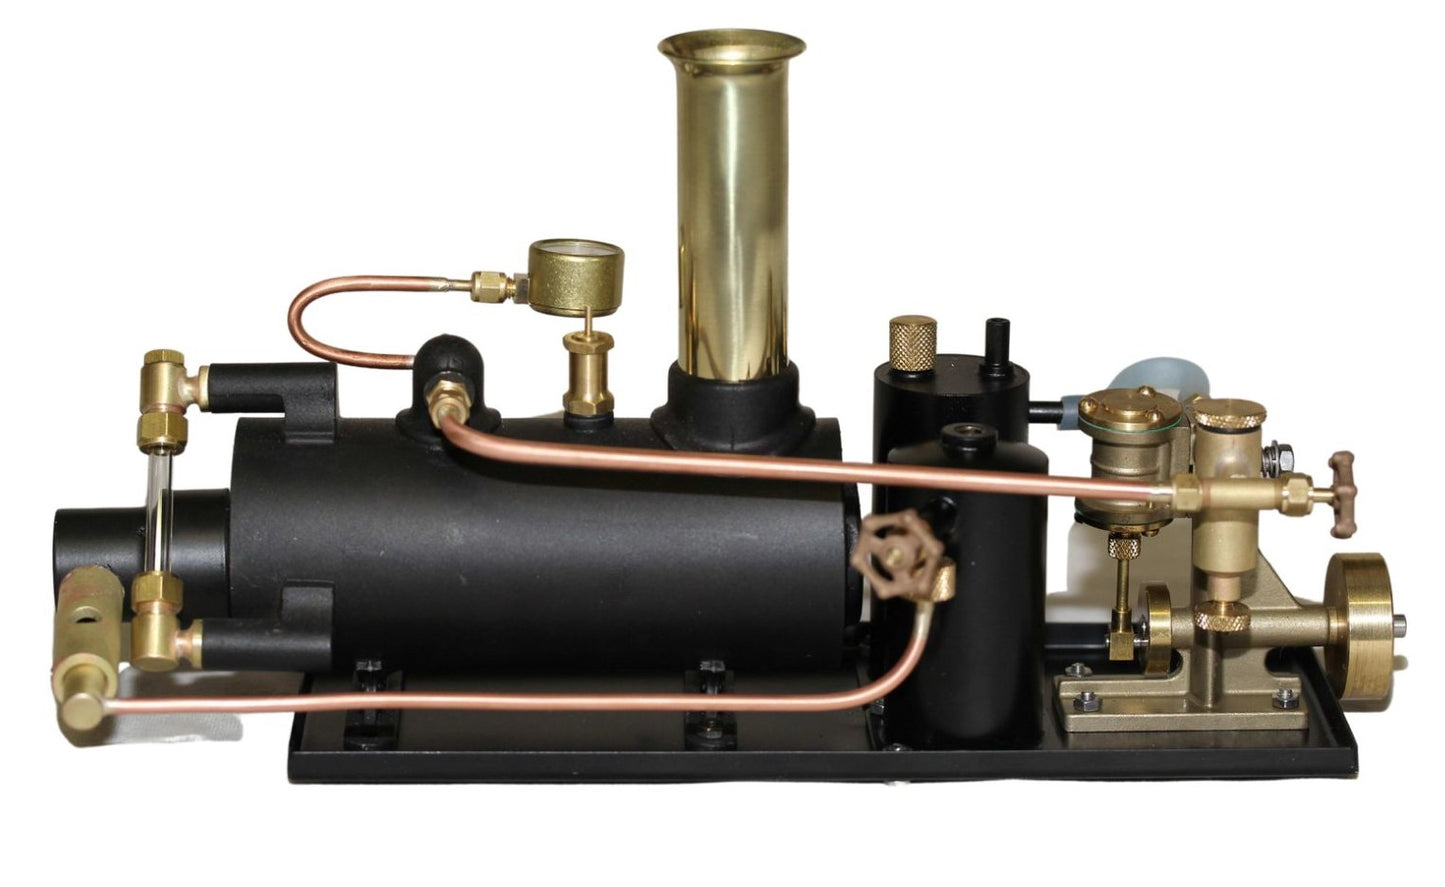 4036 Steam Plant 2" Horizontal Boiler/Tyne Engine